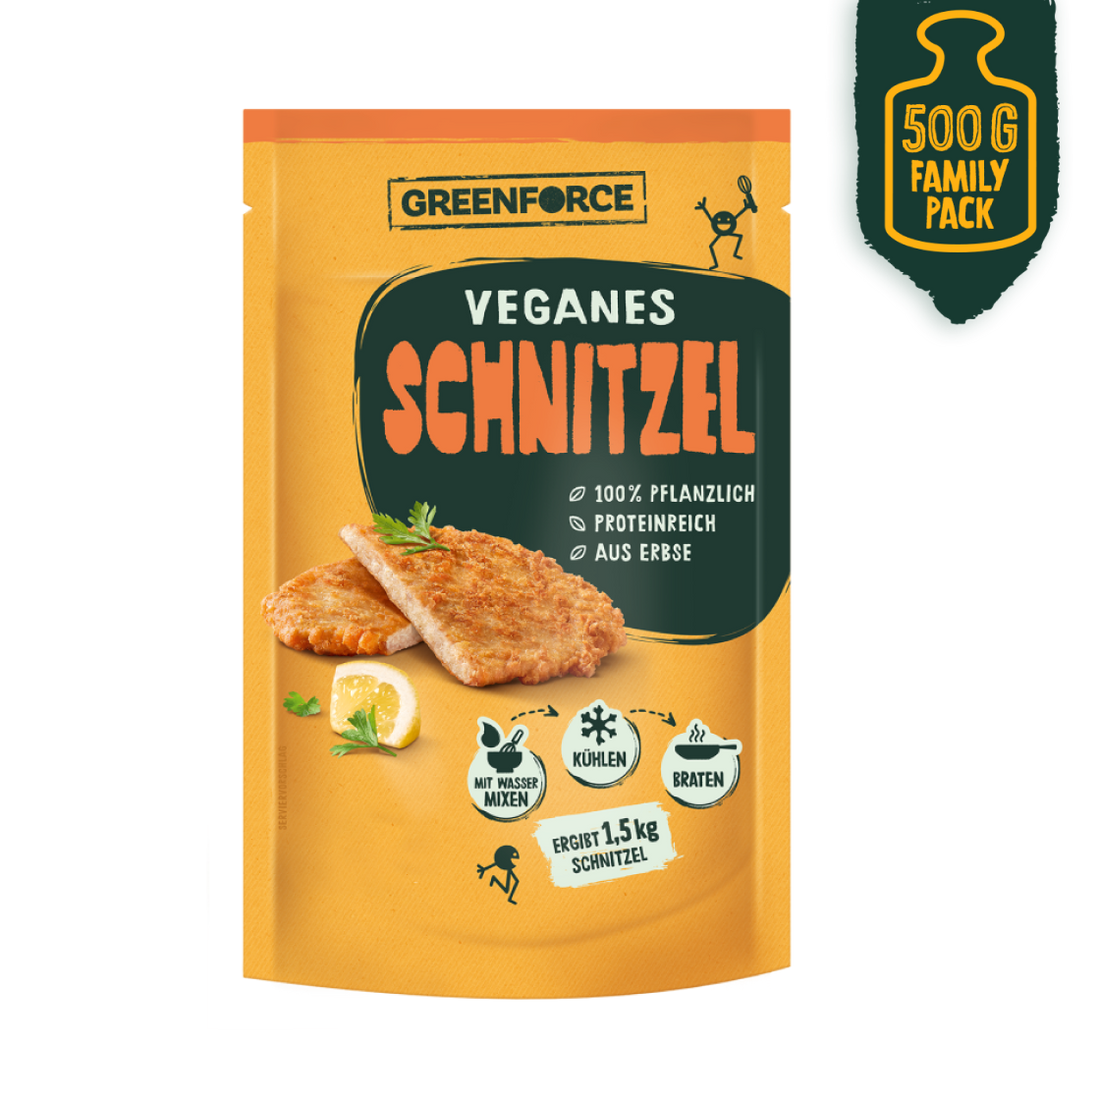 Easy To Mix vegan schnitzel - 500g family pack